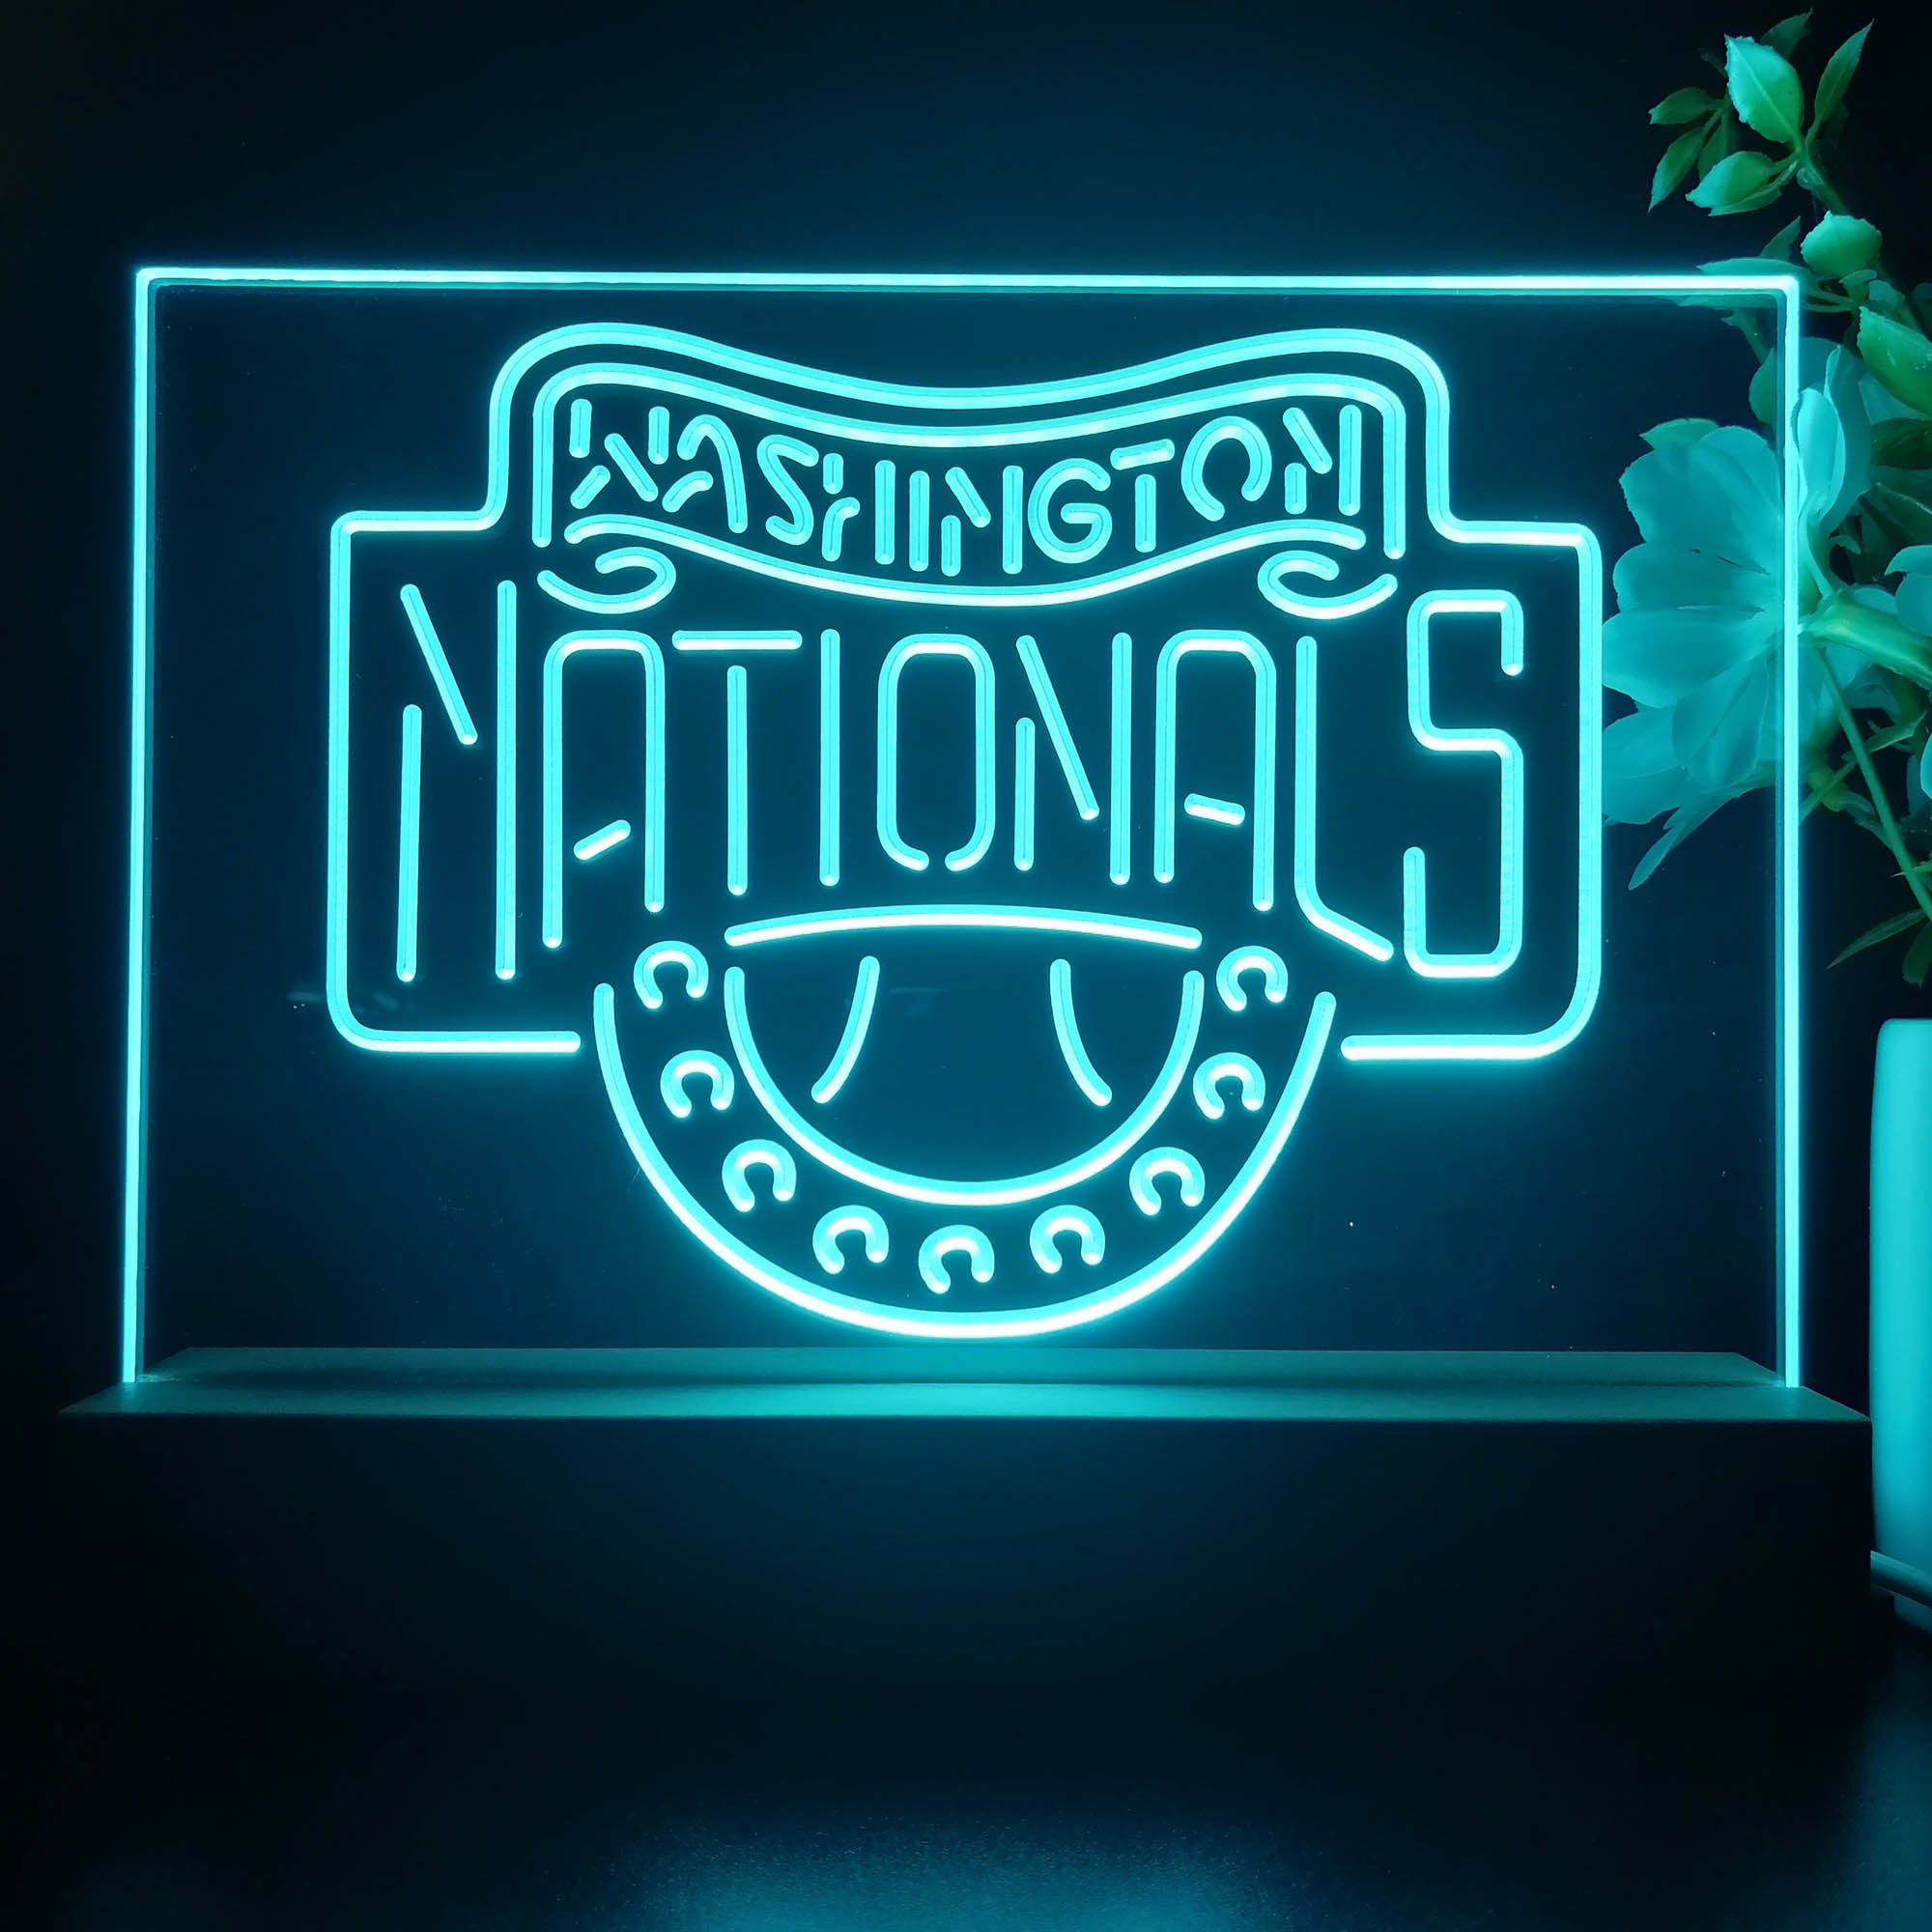 Washington Nationals Neon Sign Pub Bar Lamp